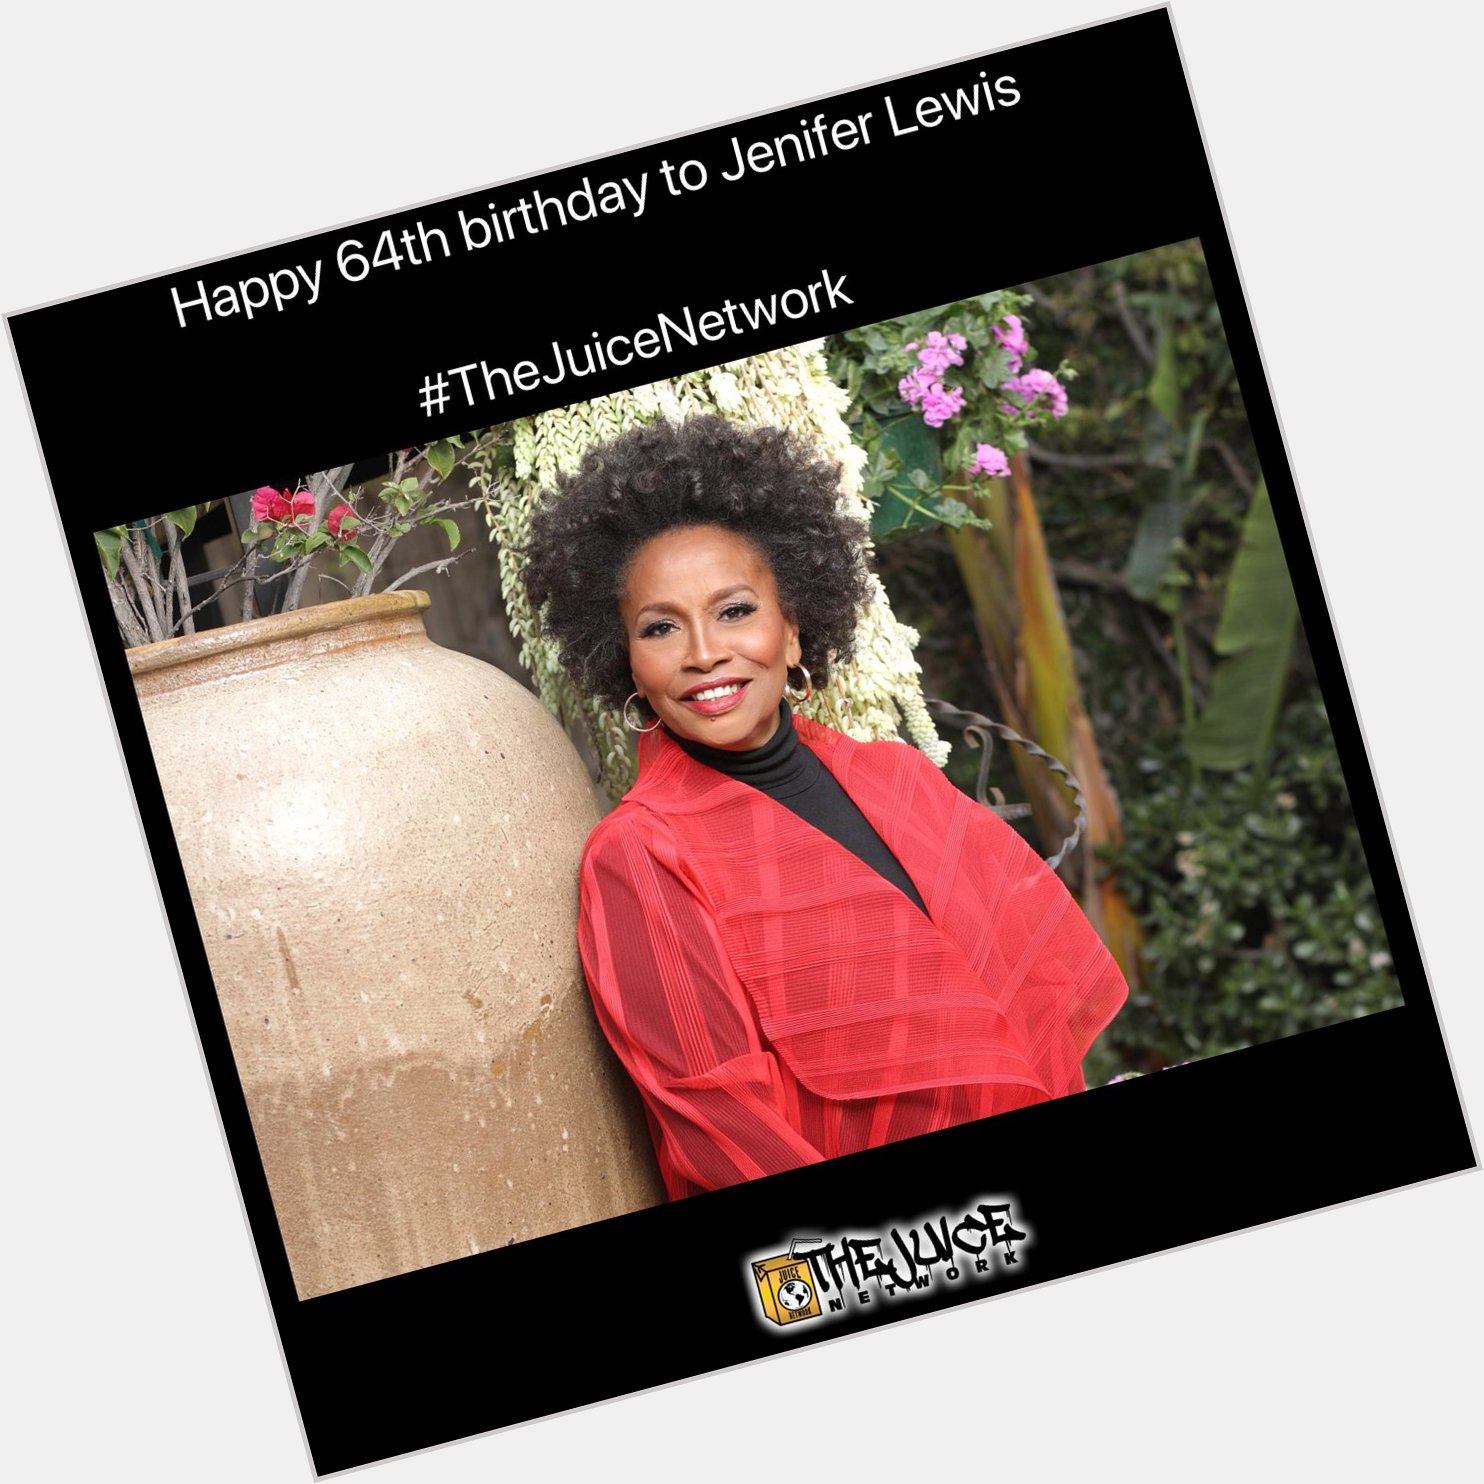 Happy 64th birthday to Jenifer Lewis!    